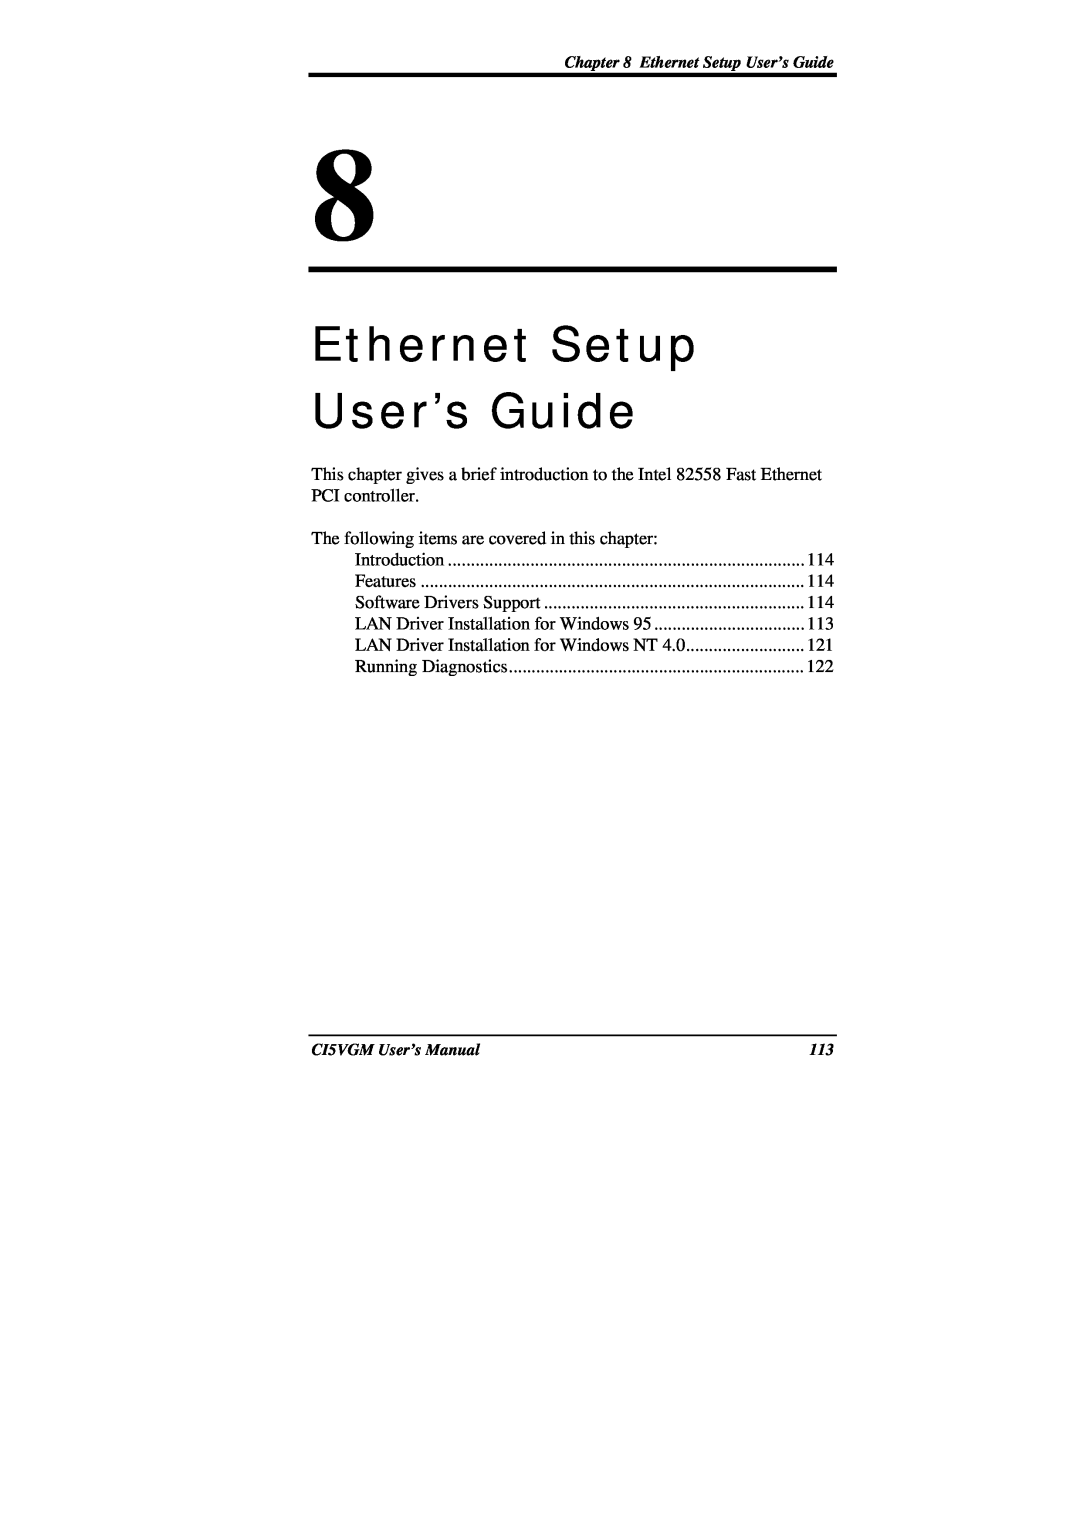 IBM CI5VGM Series user manual Ethernet Setup User’s Guide 